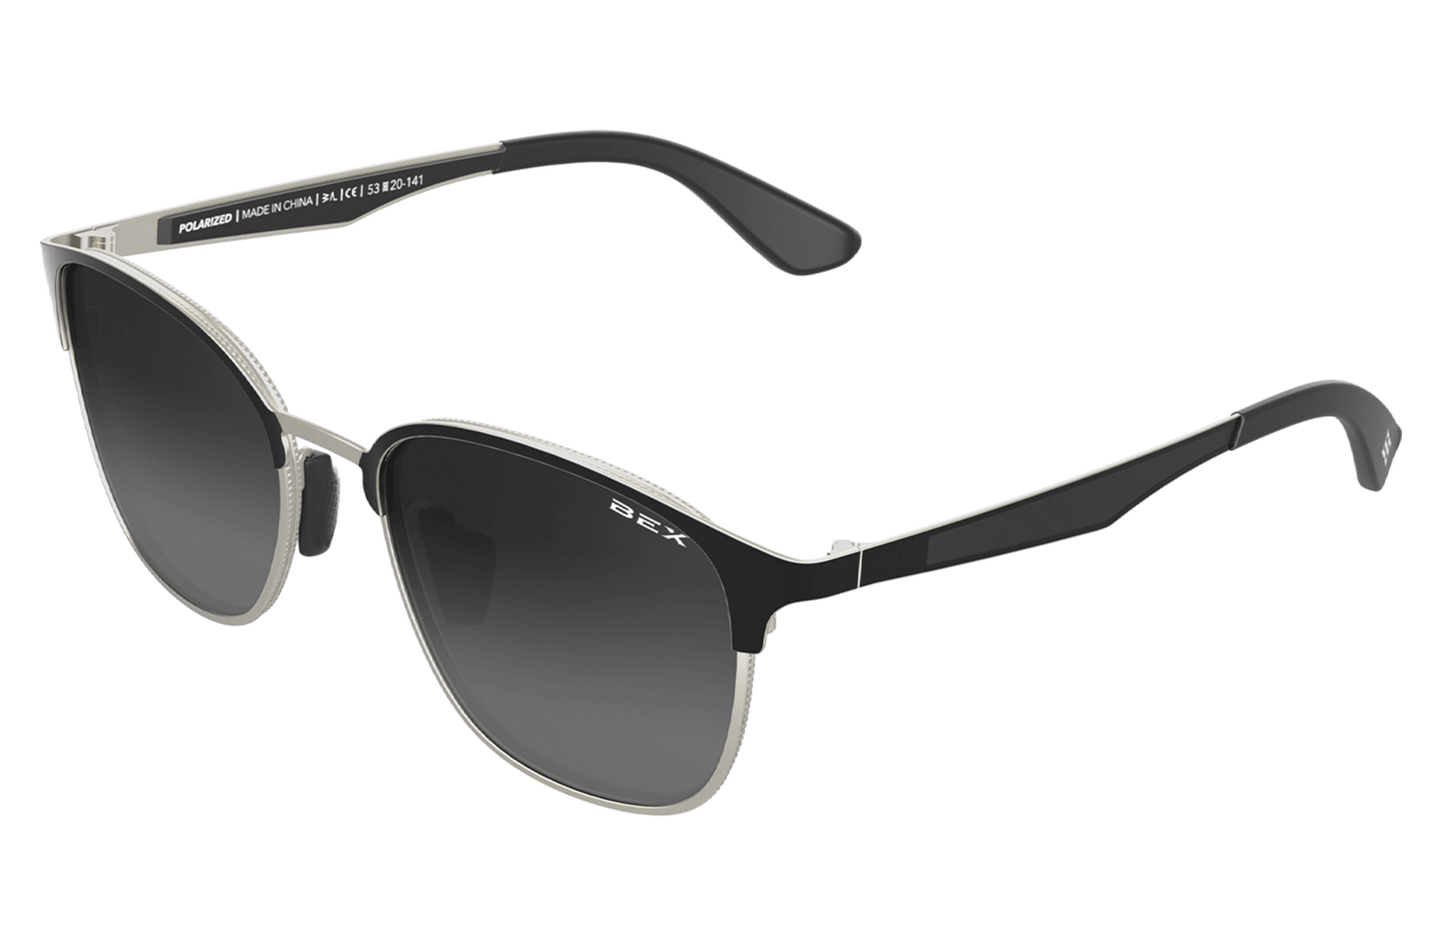 Bex Sunglasses - Tanaya (Silver/Gray)